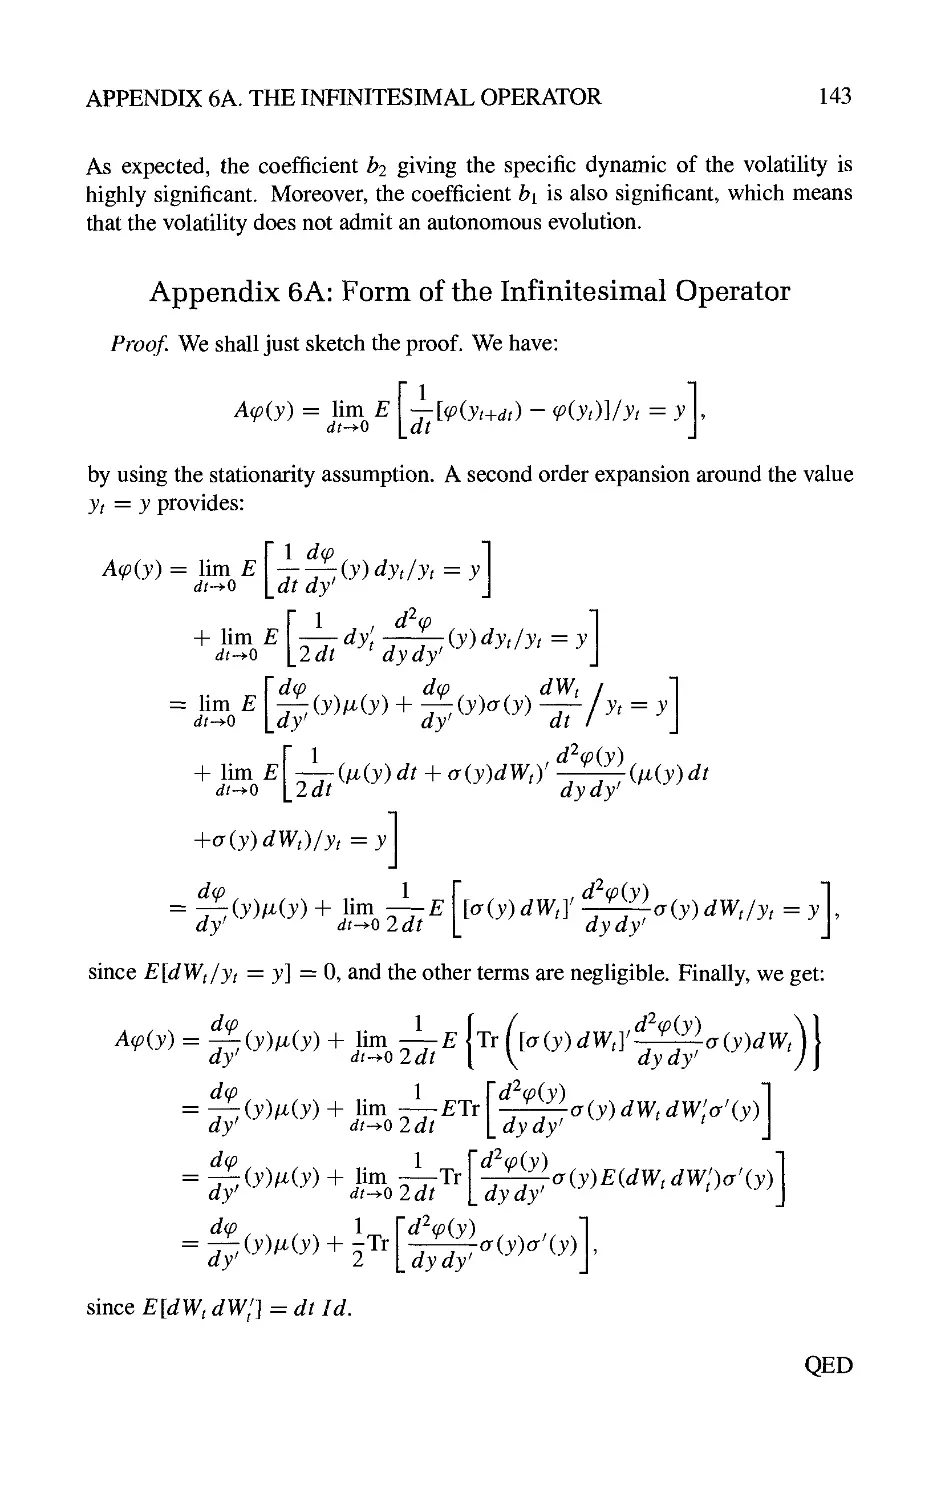 Appendix 6A: Form of the Infinitesimal Operator